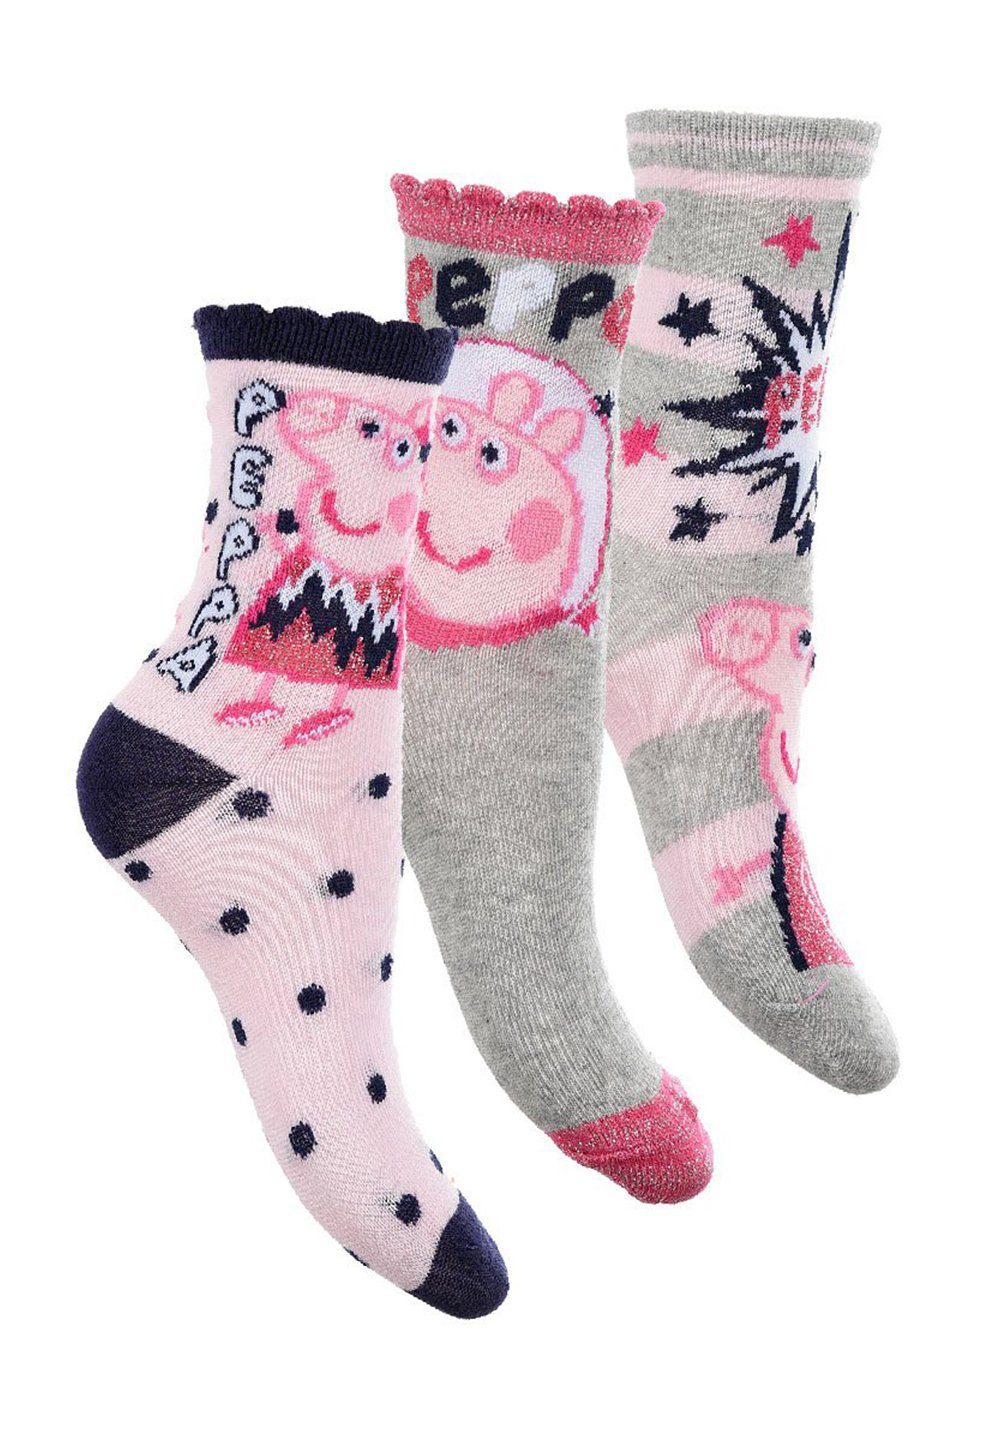 Peppa Pig Socken Peppa Wutz Paket Socken (6-Paar) Mädchen Kinder Strümpfe